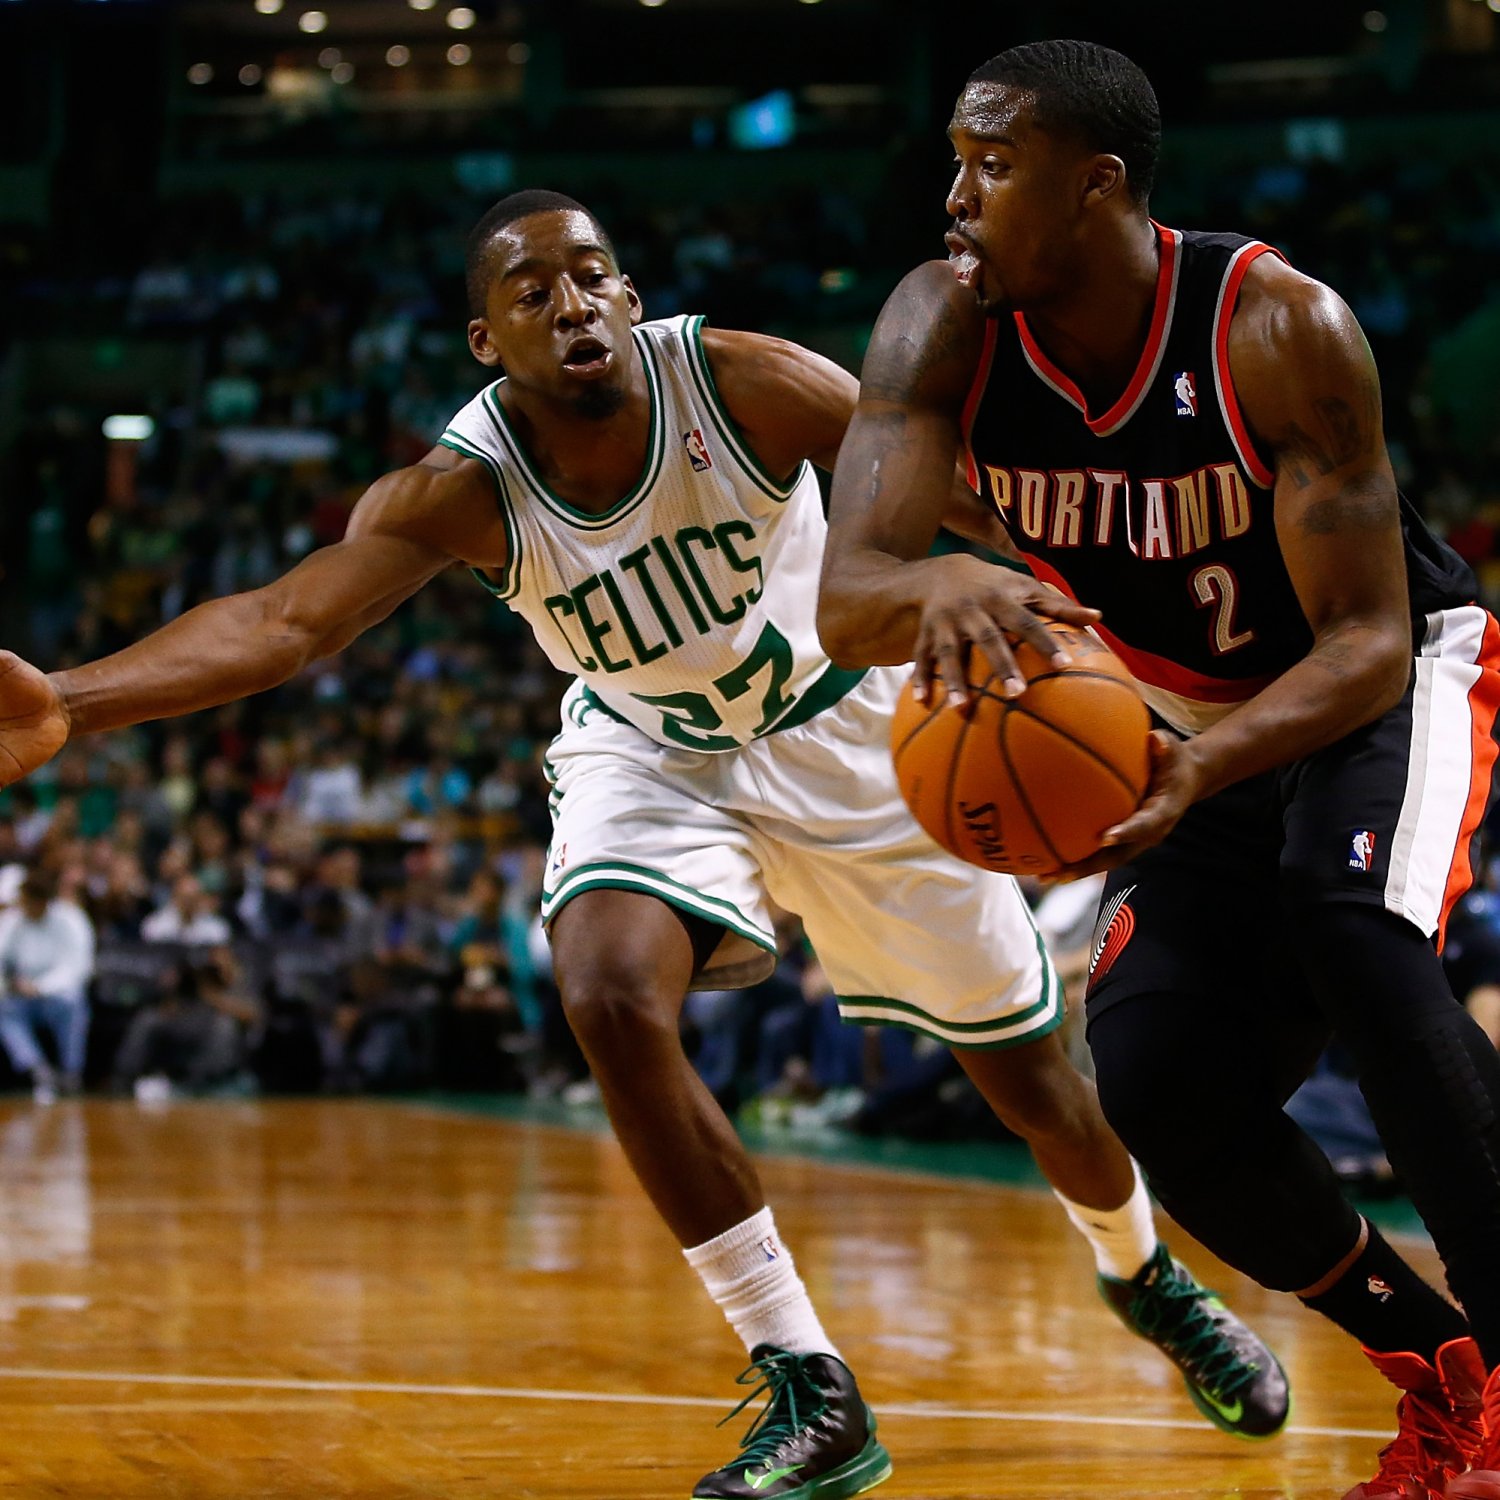 Boston Celtics vs. Portland Trail Blazers Live Score and Analysis